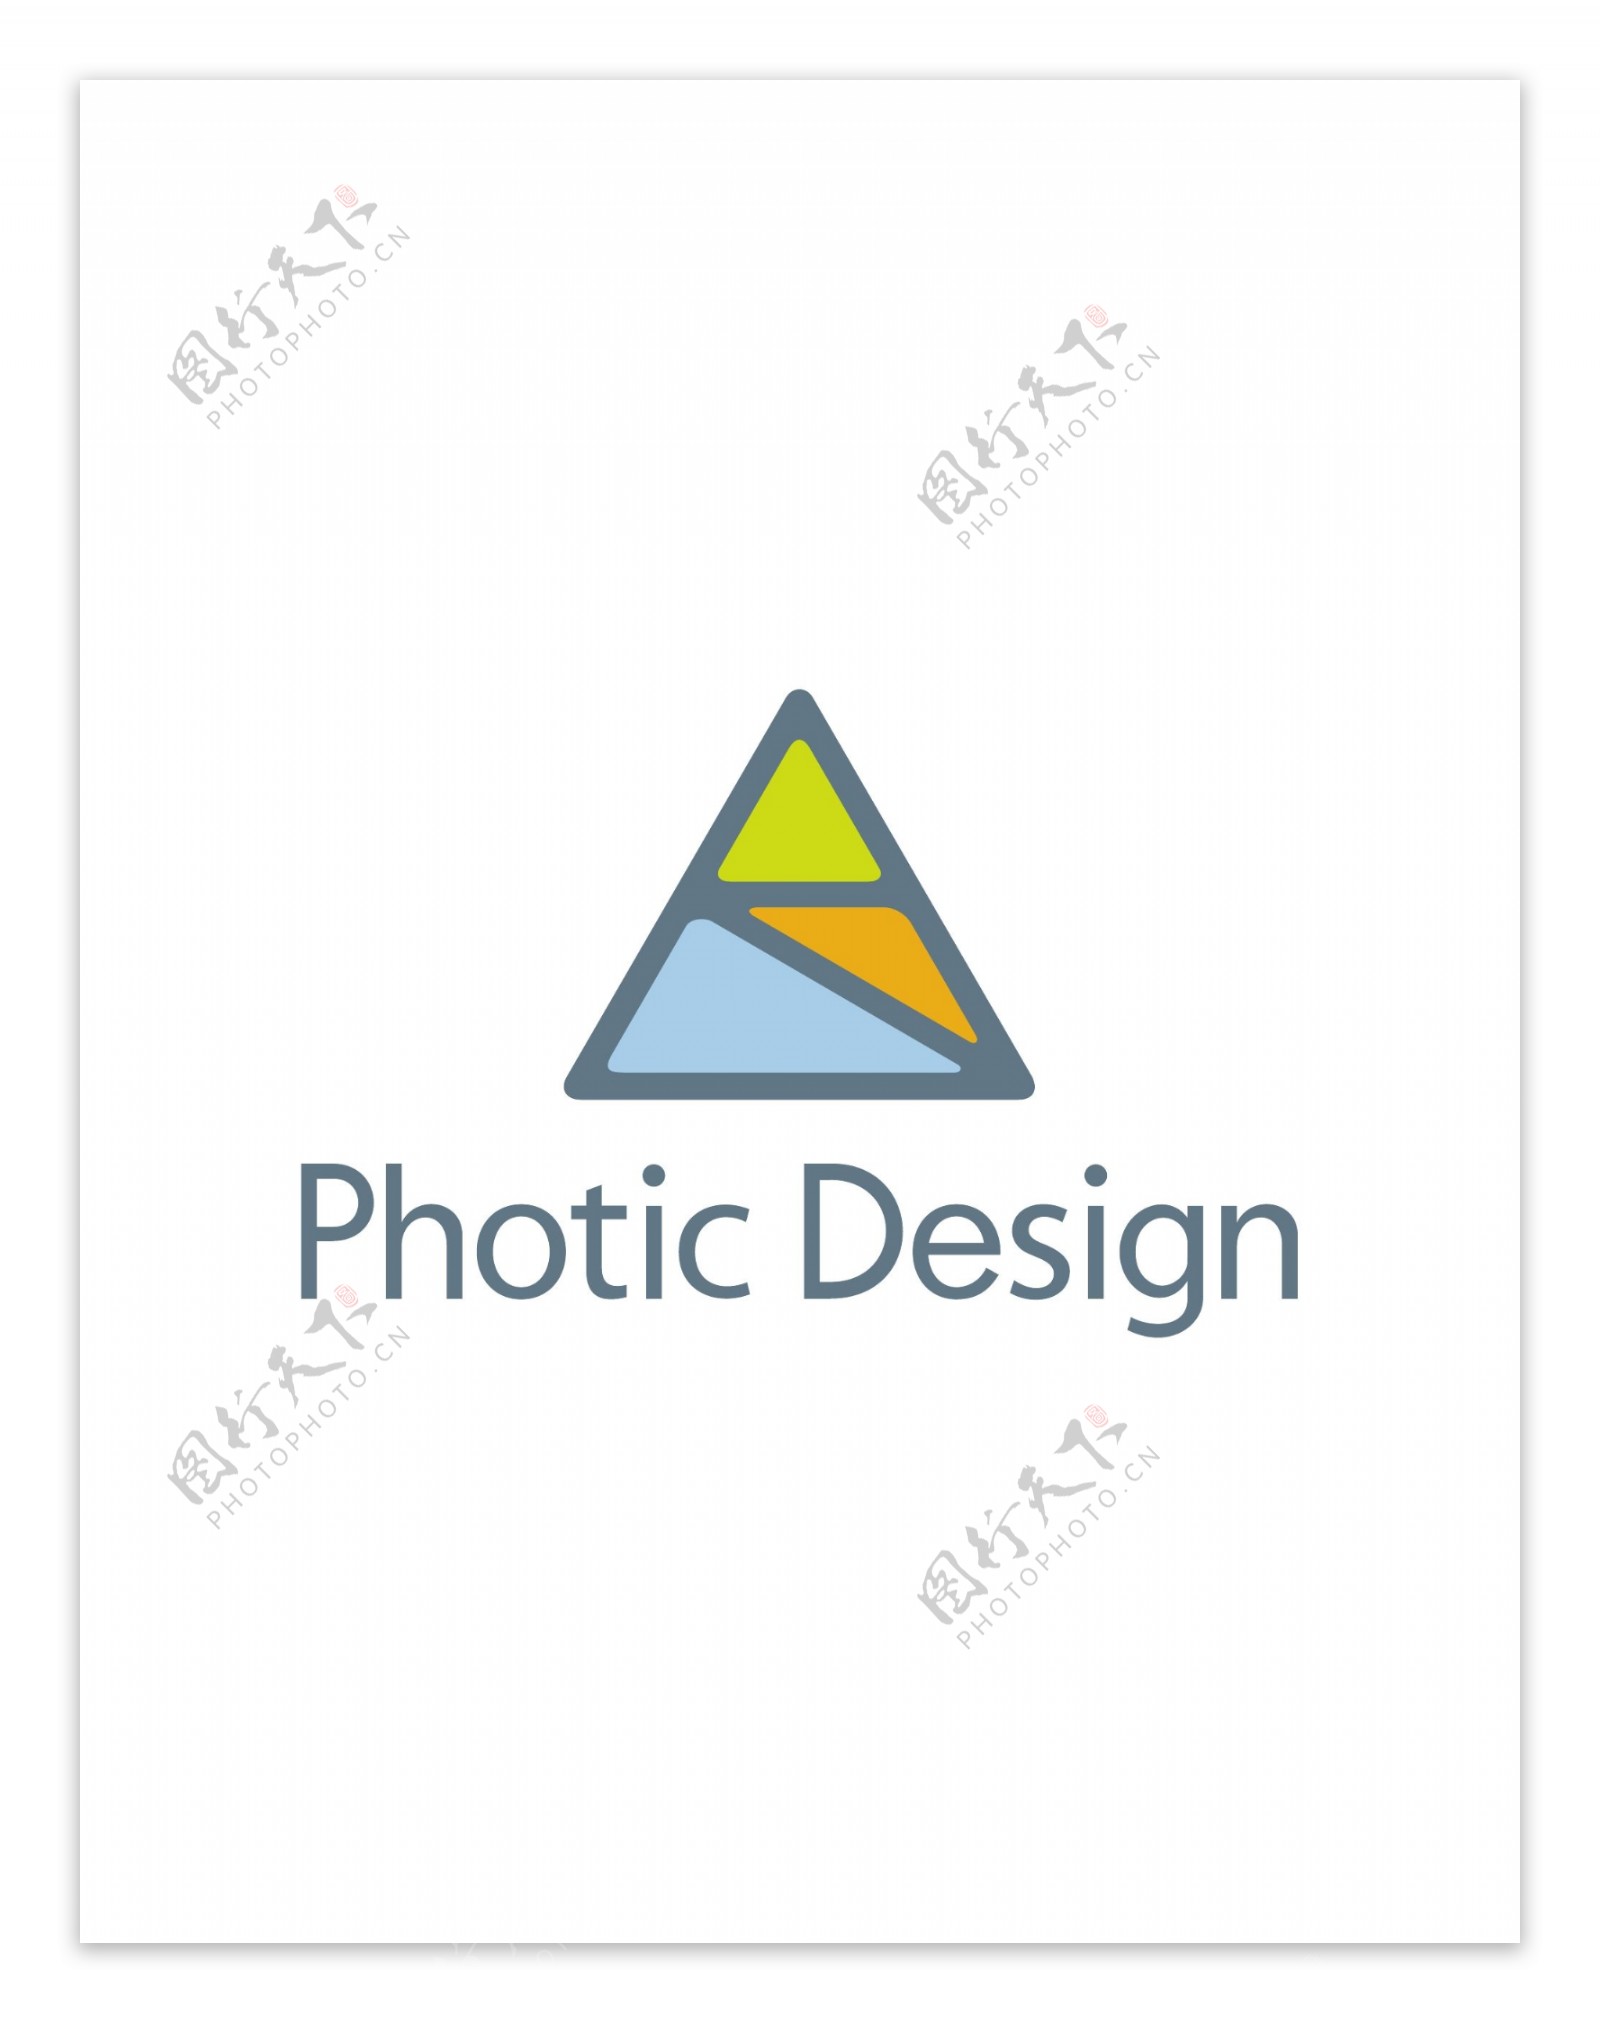 PhoticDesignlogo设计欣赏PhoticDesign广告公司LOGO下载标志设计欣赏